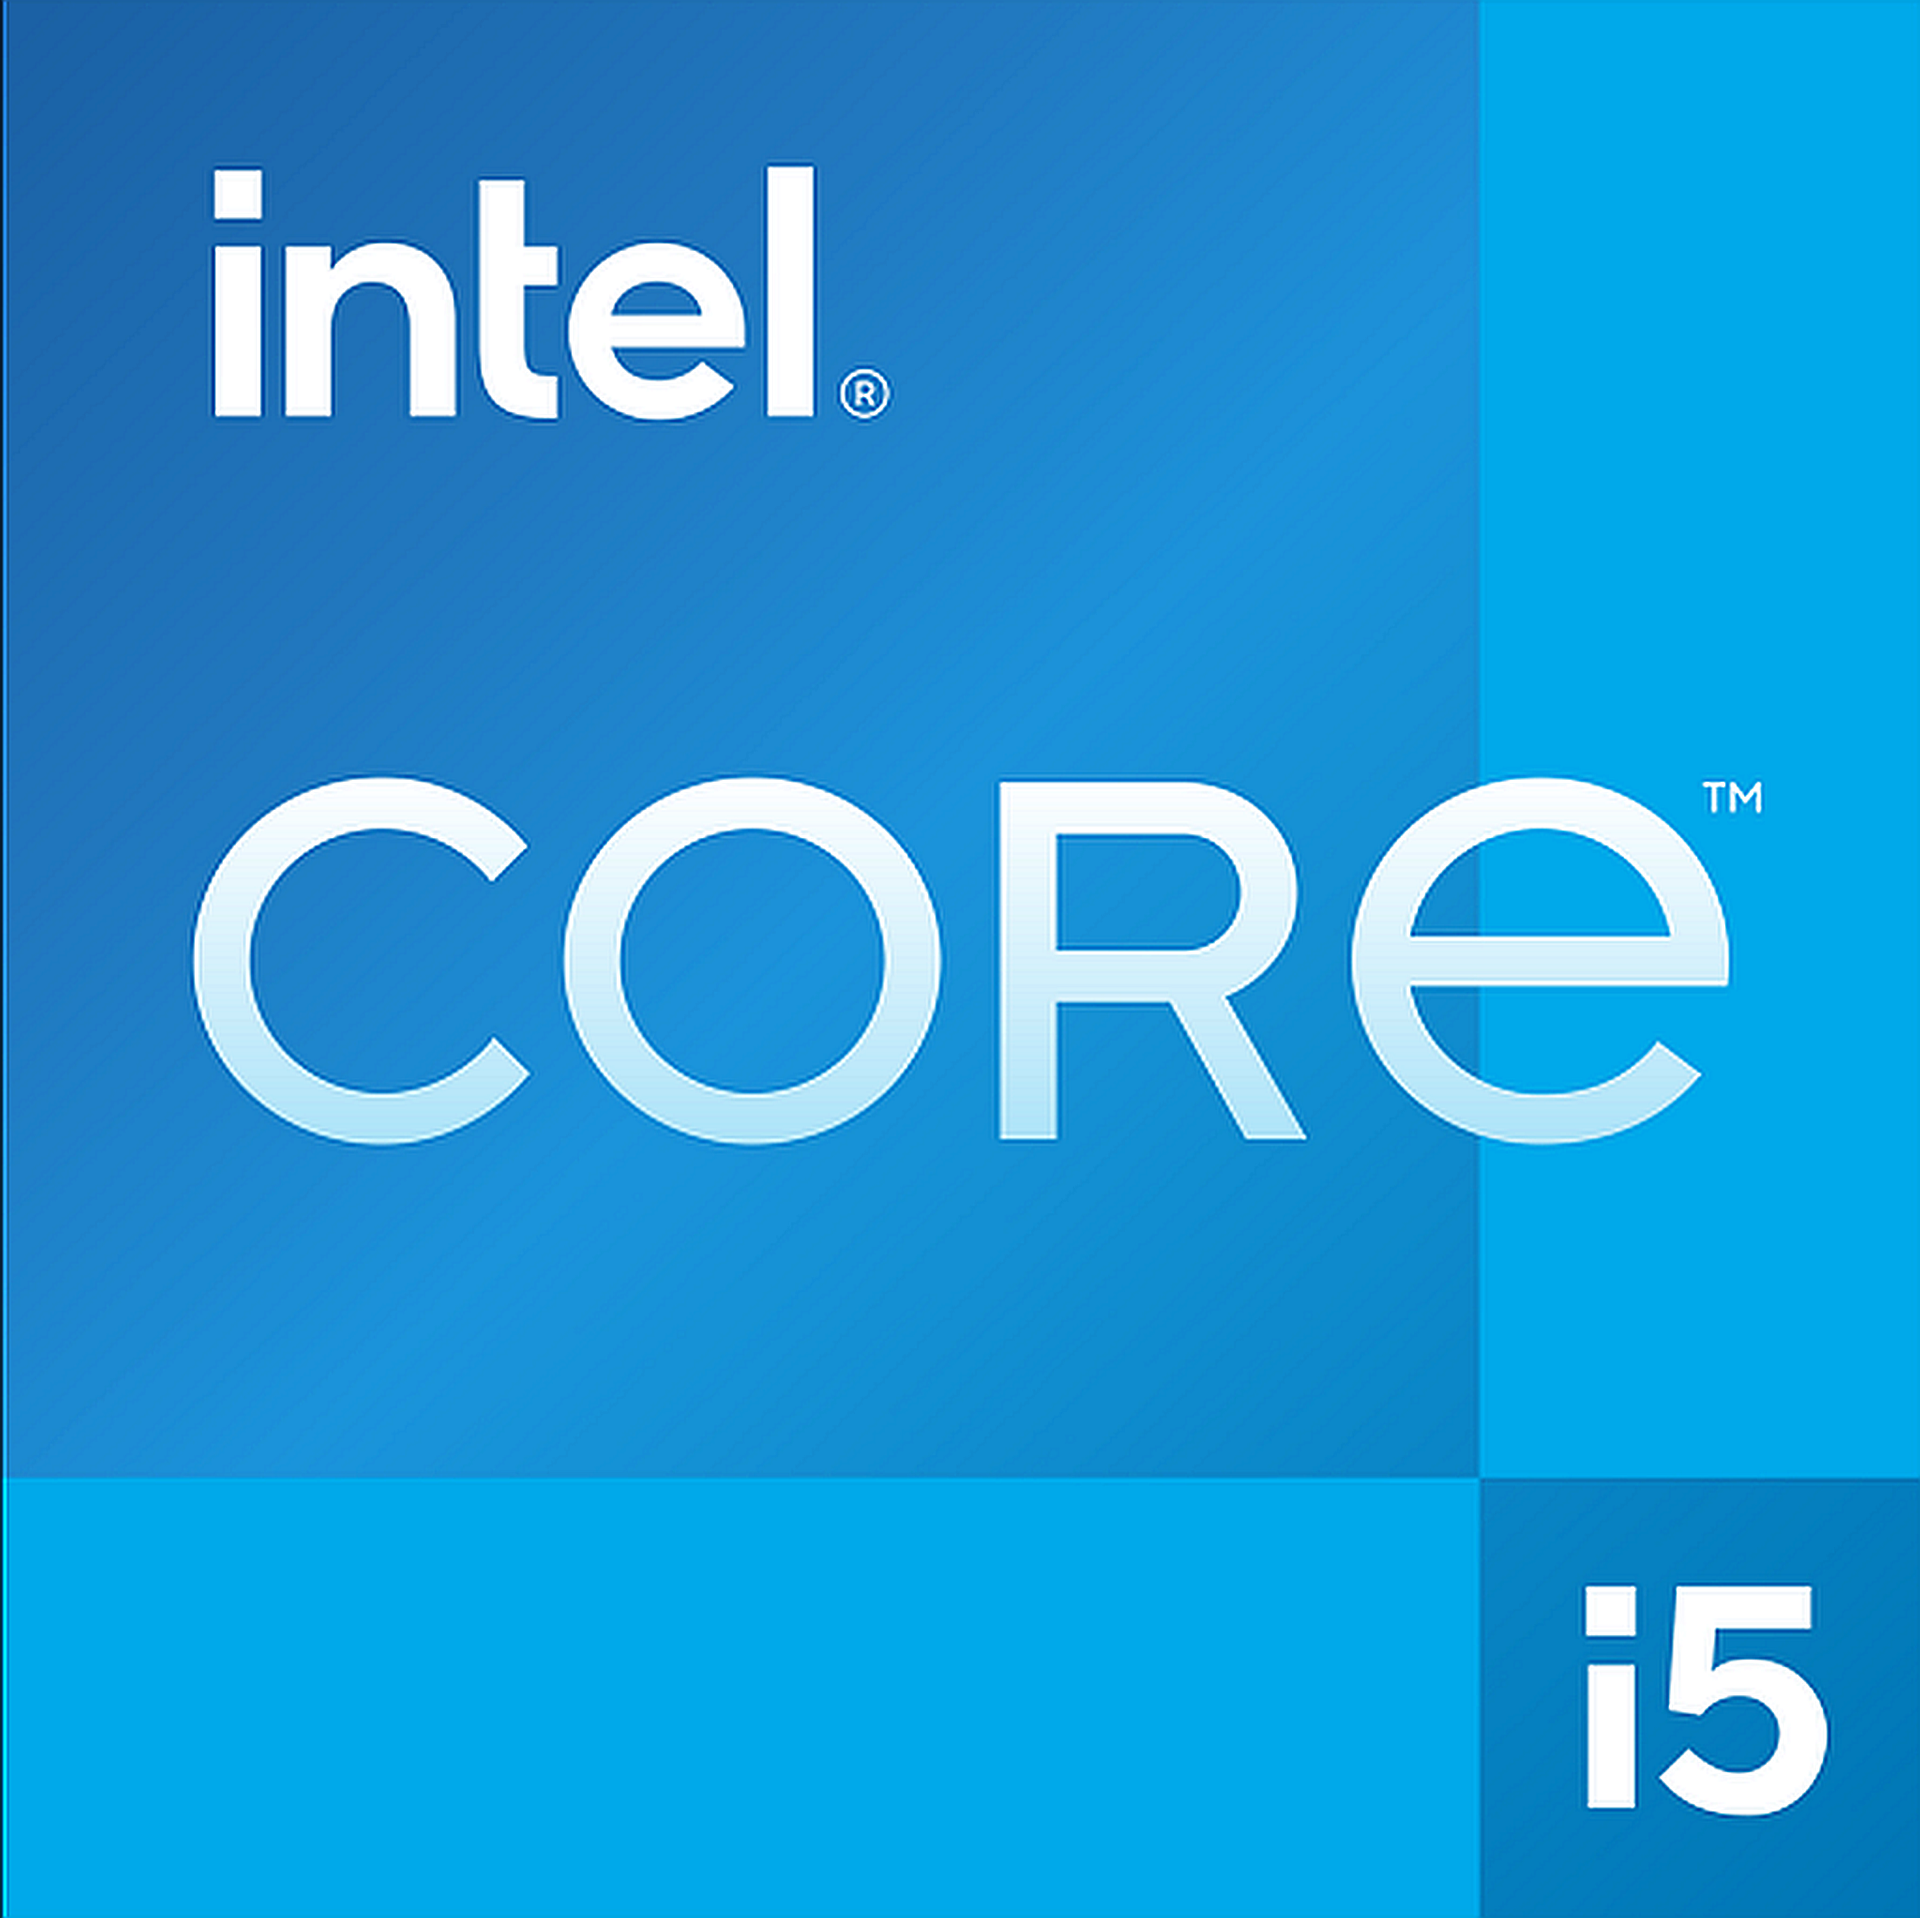 Intel Core I5 k Falls Flat Against The Amd Ryzen 5 5600x On Geekbench Notebookcheck Net News